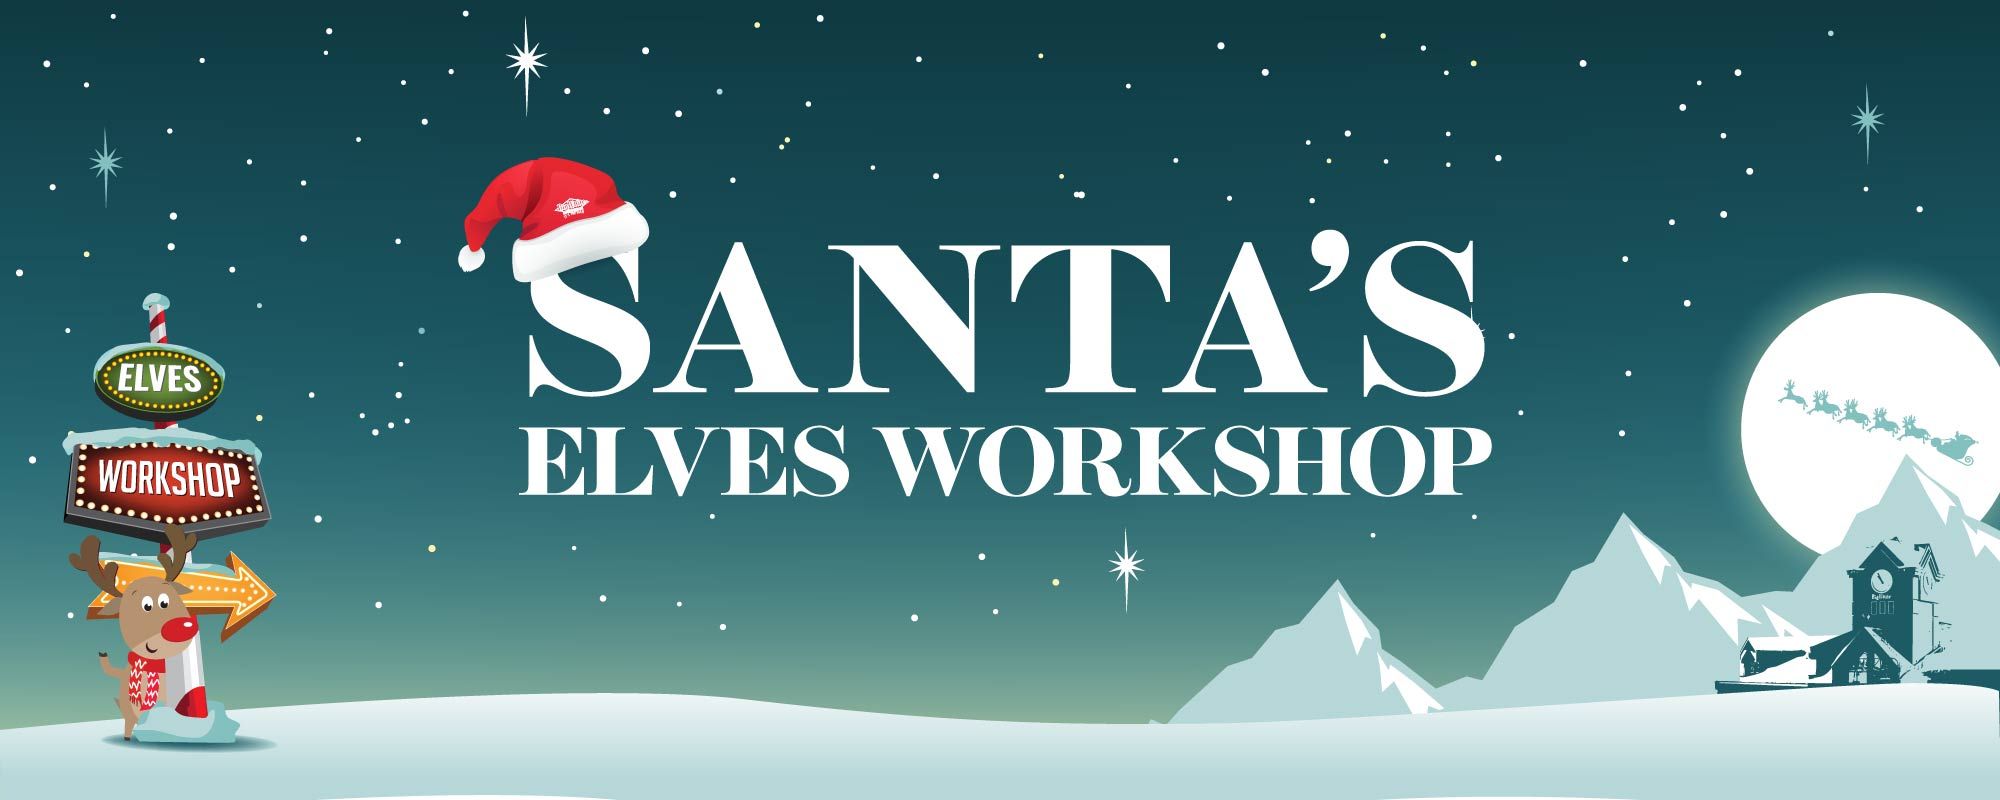 Santa's elves workshop - big white ski resort